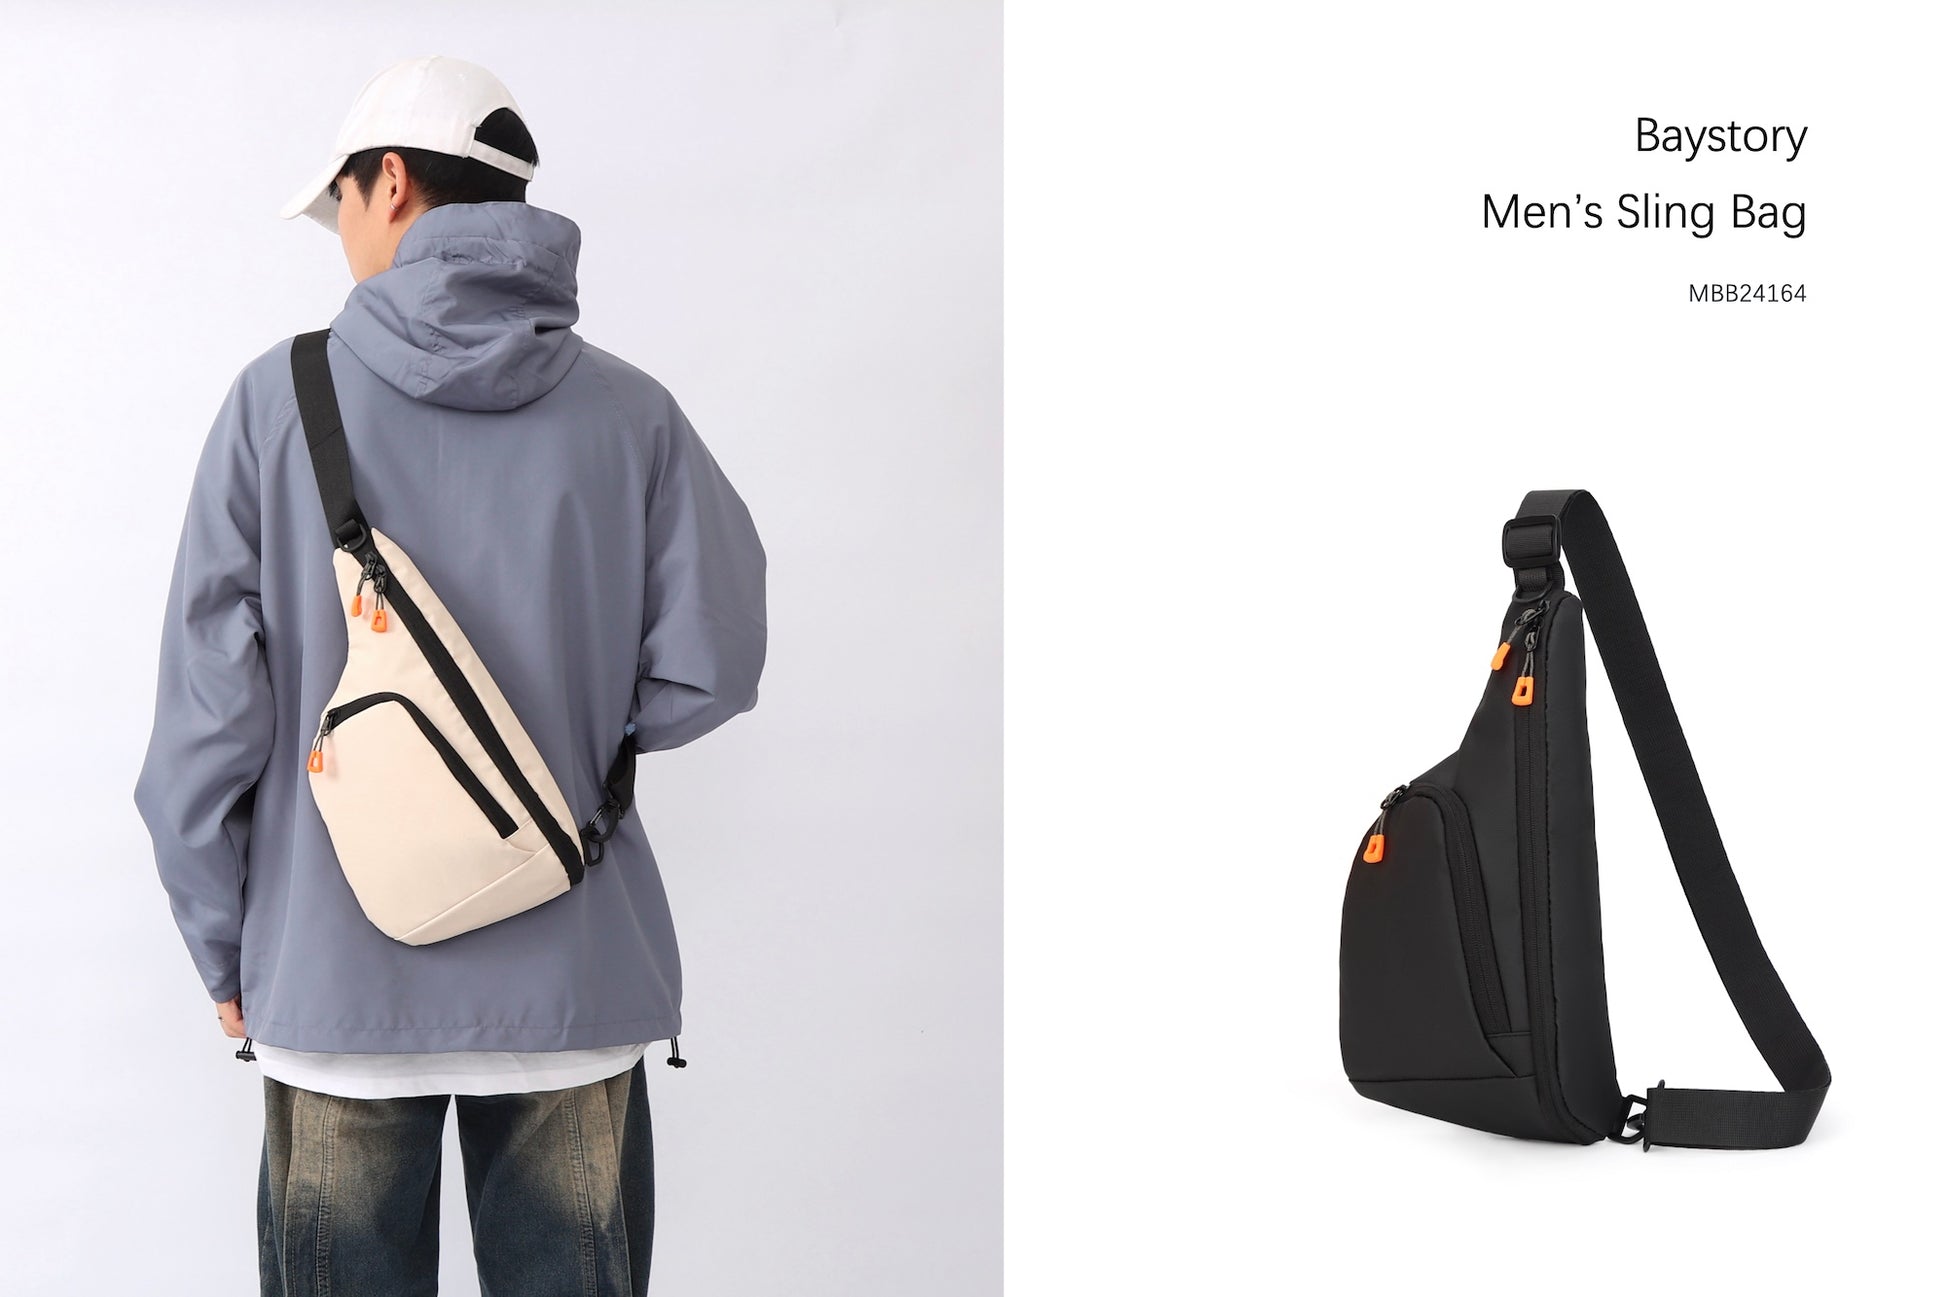 Men's Sling Bag MBB24164 - Baystory